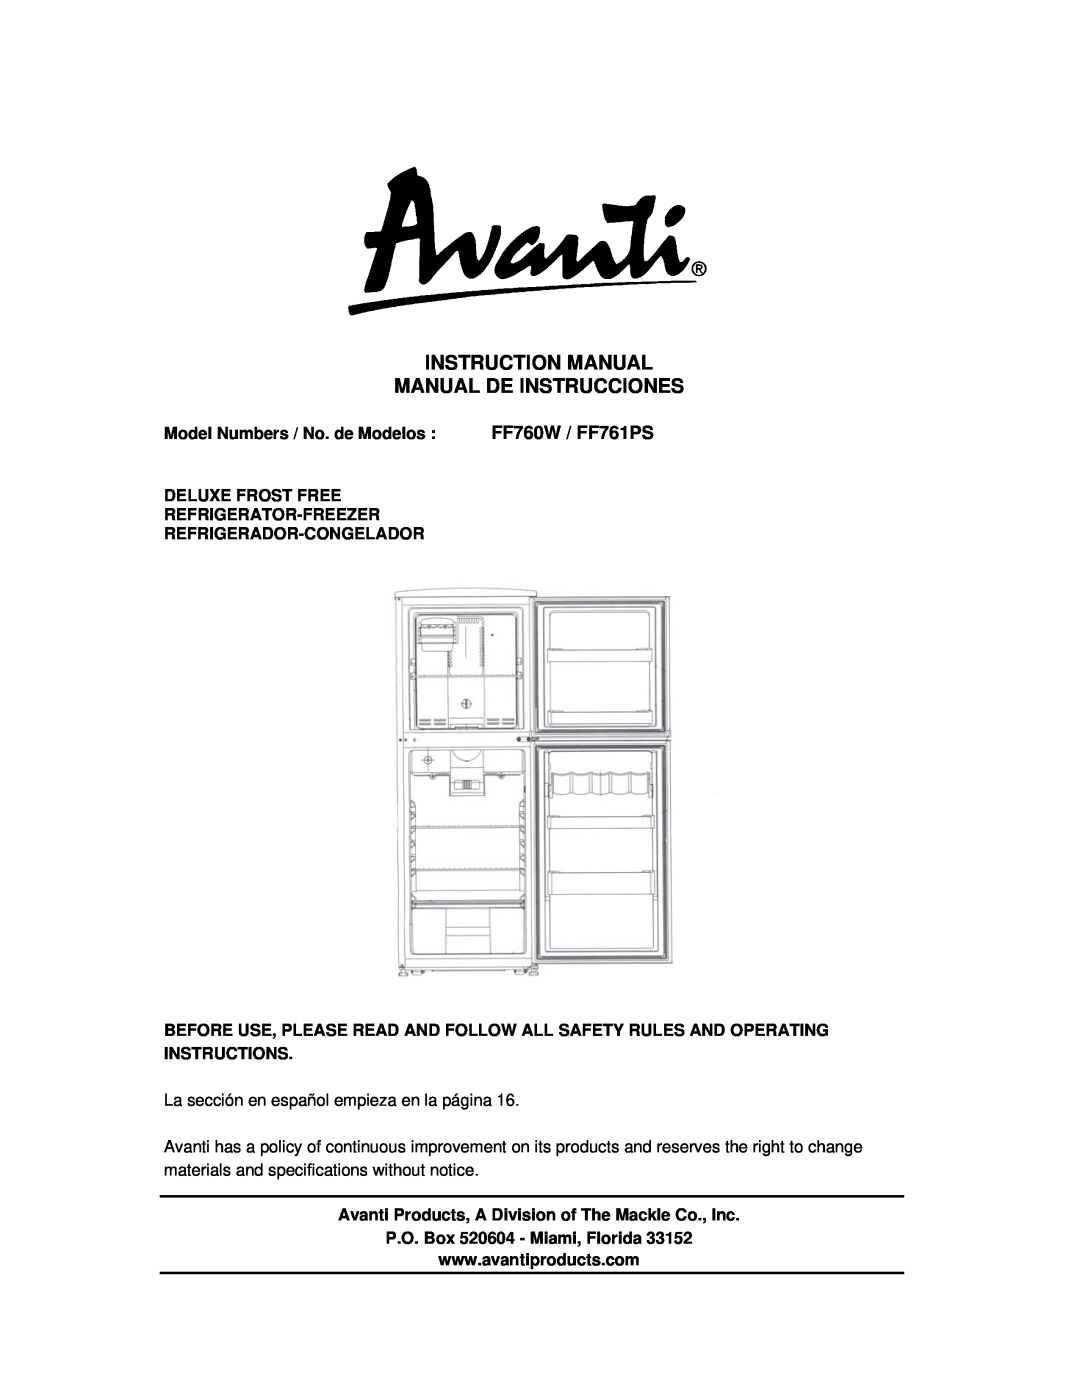 Avanti instruction manual Model Numbers / No. de Modelos, FF760W / FF761PS, Deluxe Frost Free Refrigerator-Freezer 